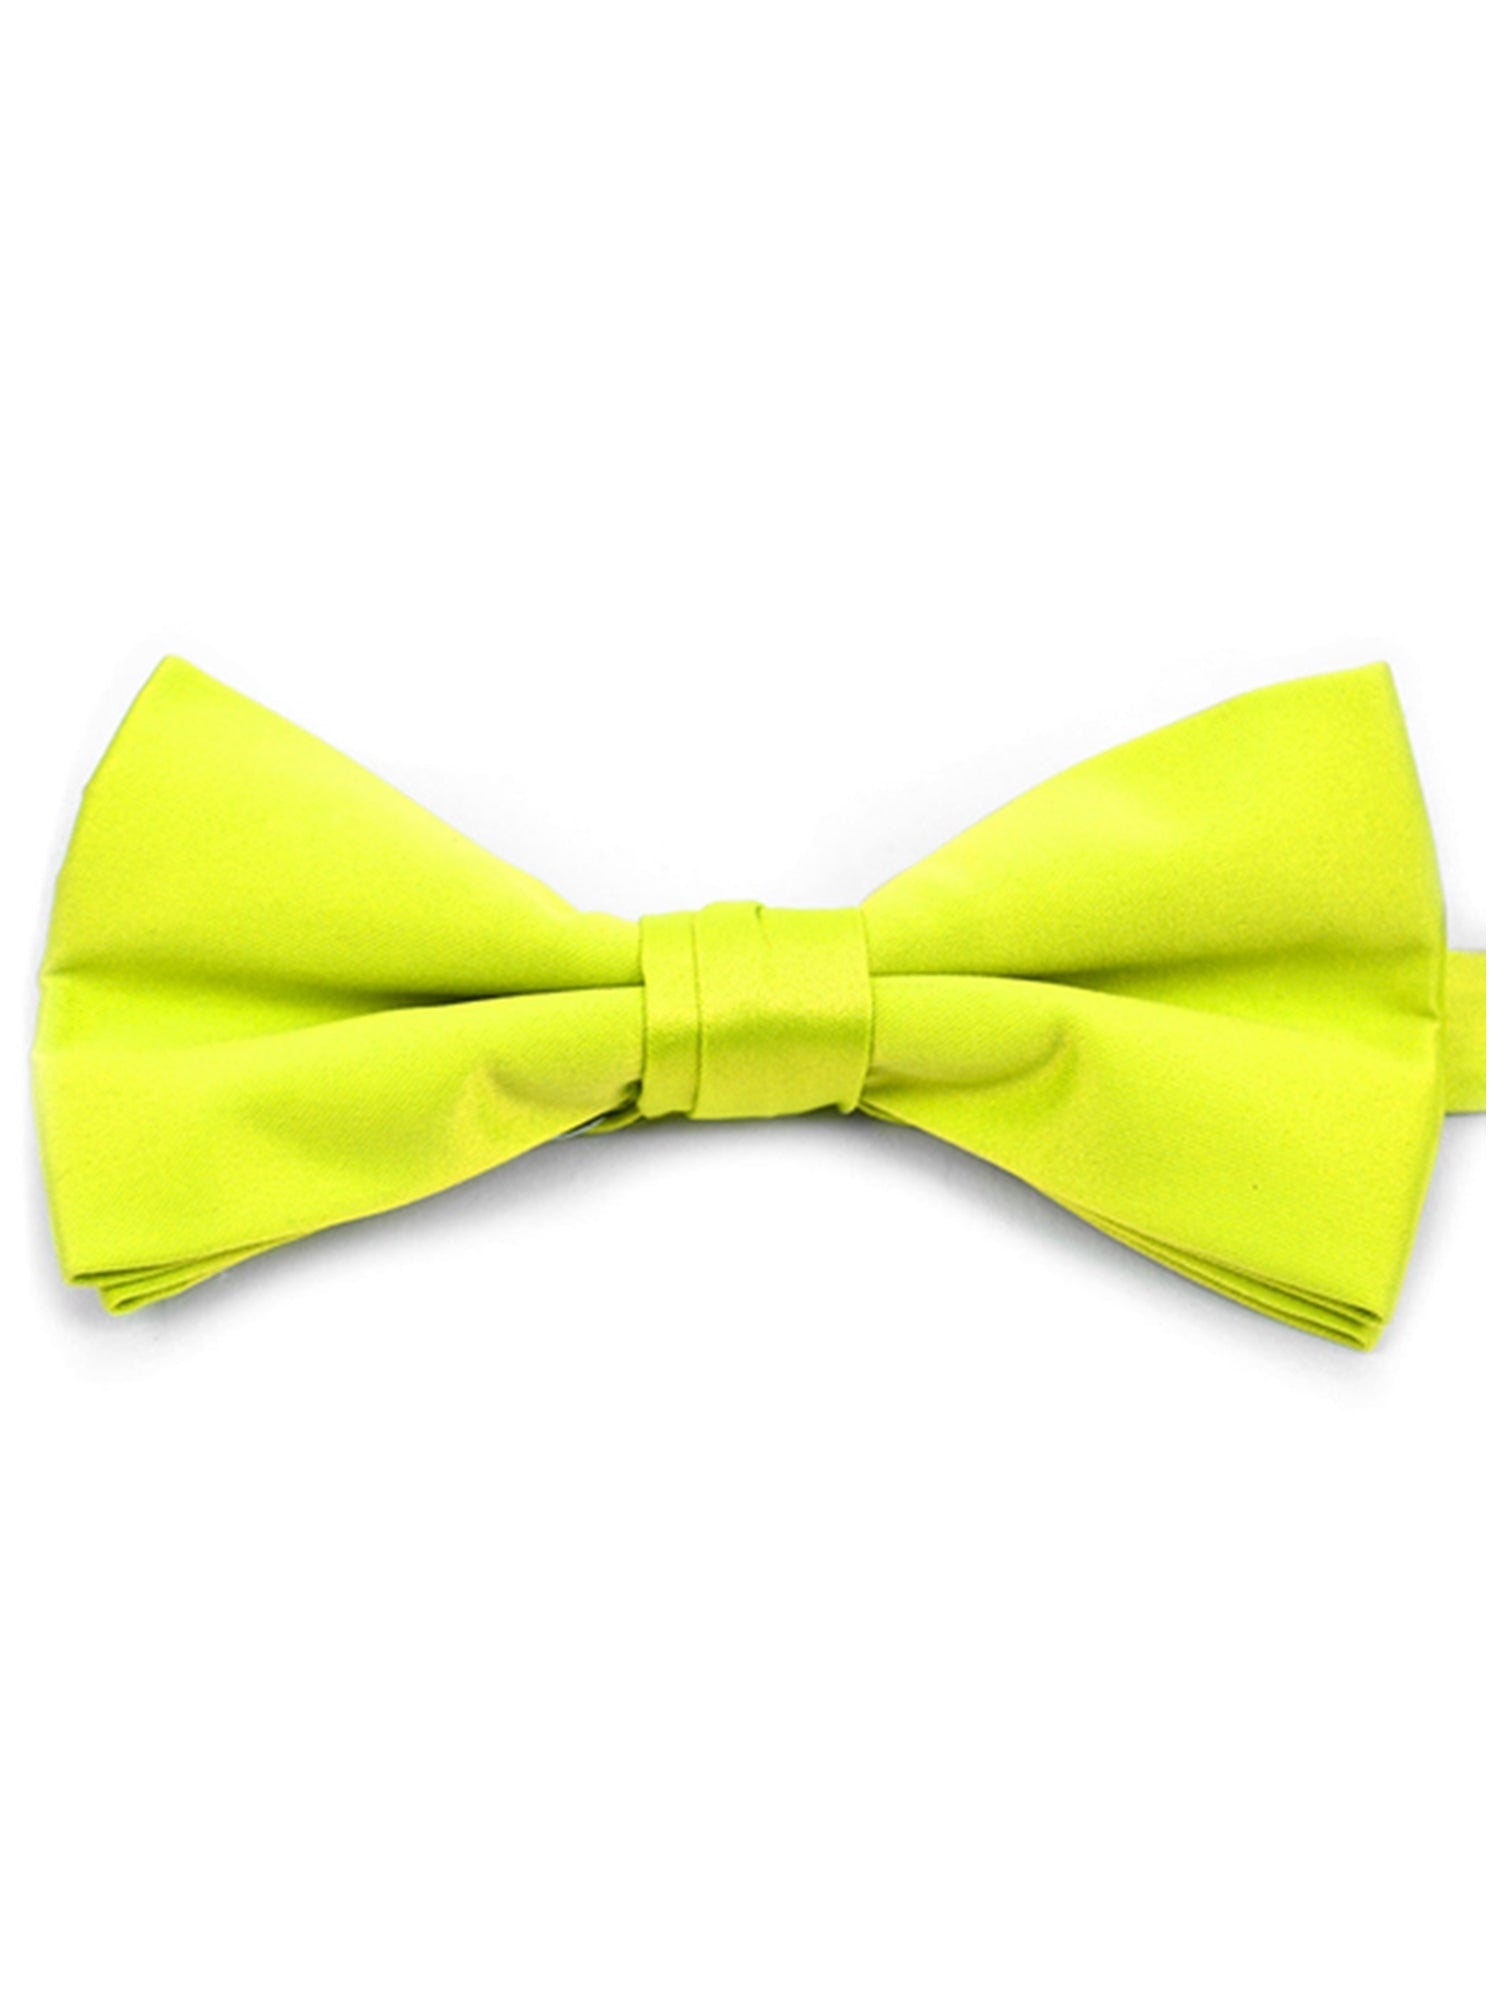 Men's Pre-tied Adjustable Length Bow Tie - Formal Tuxedo Solid Color Men's Solid Color Bow Tie TheDapperTie Neon Yellow One Size 